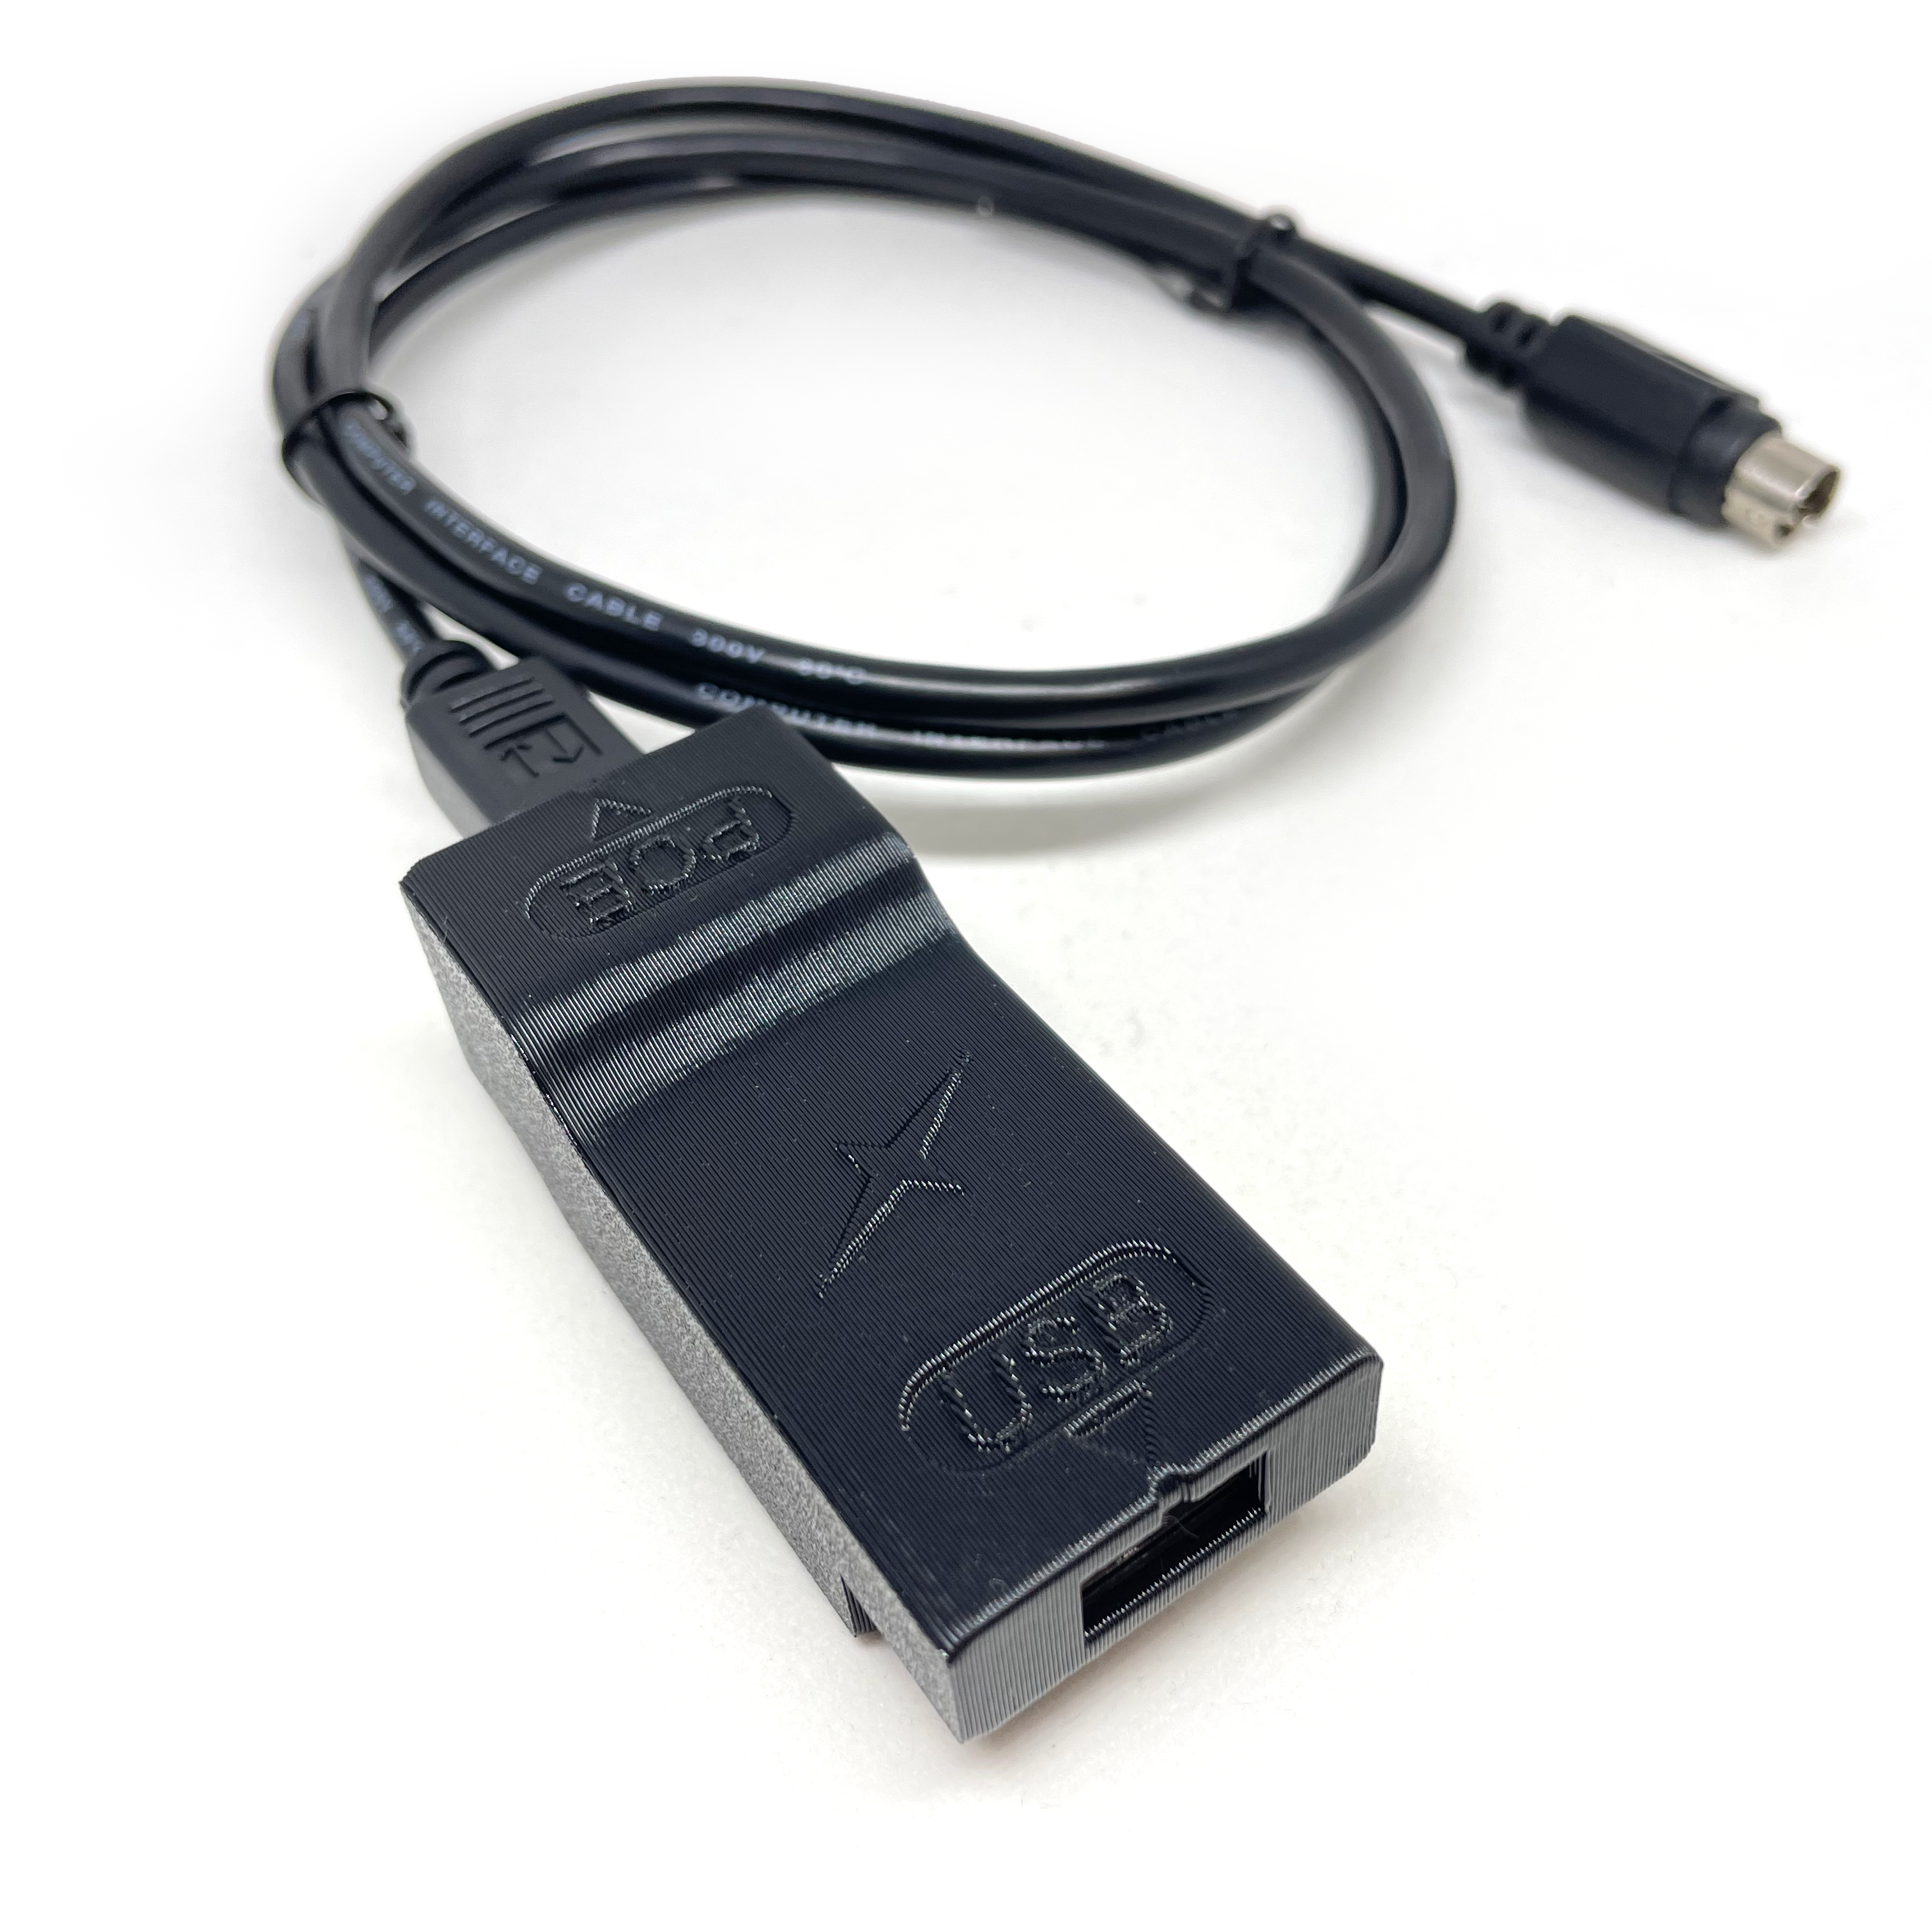 PS5 Gaming Console Hub, 4 USB Port Hub,1 Charging Macao